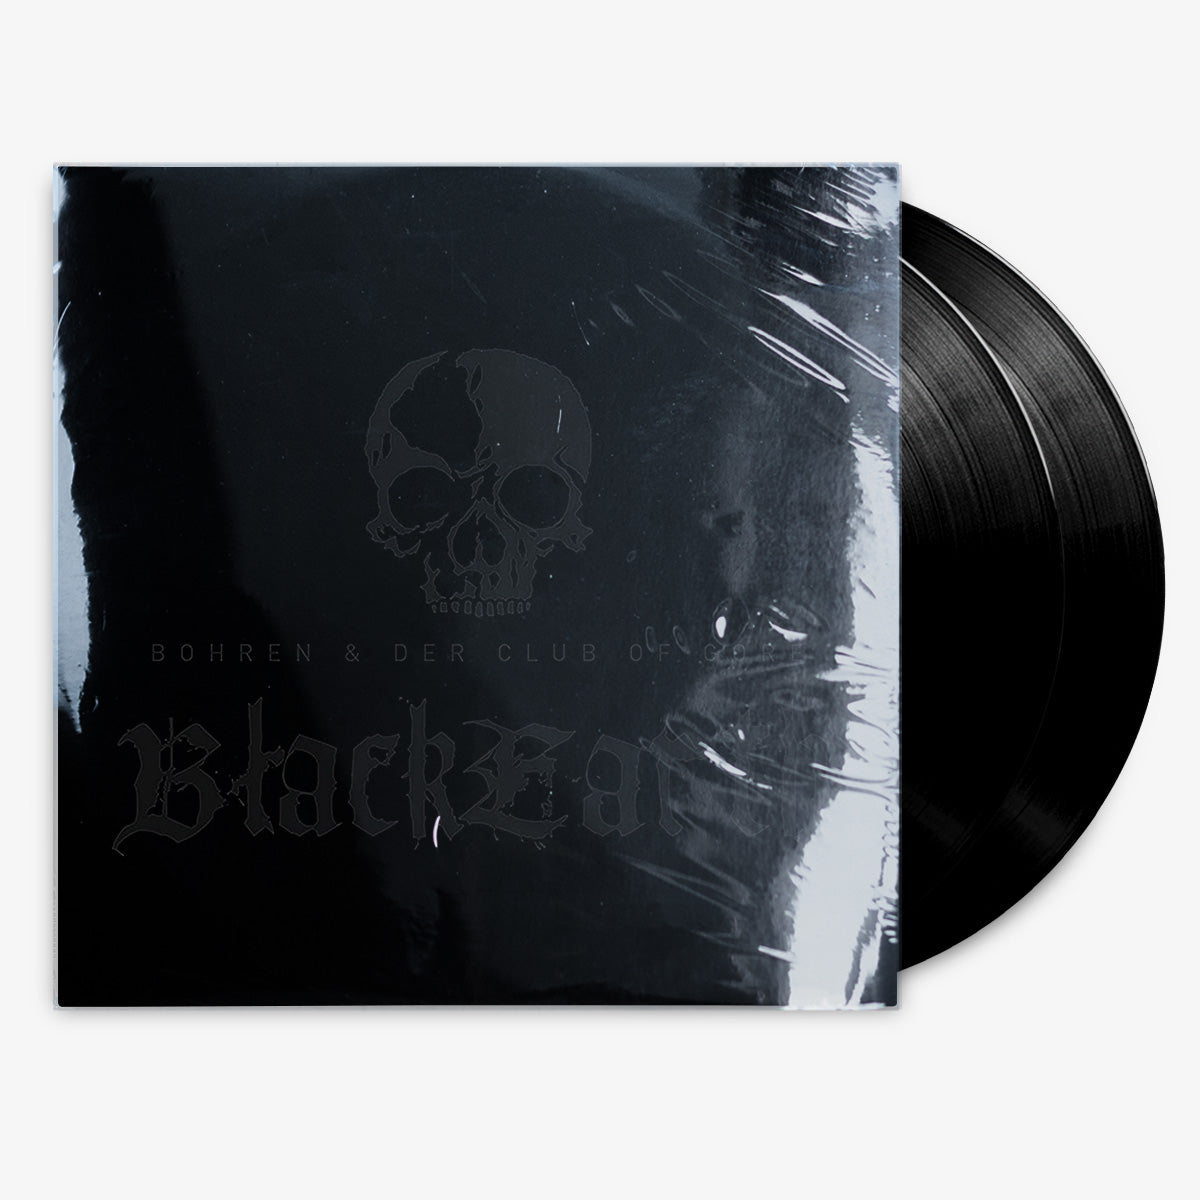 Bohren & Der Club Of Gore 'Black Earth' 2x12" LP Black vinyl